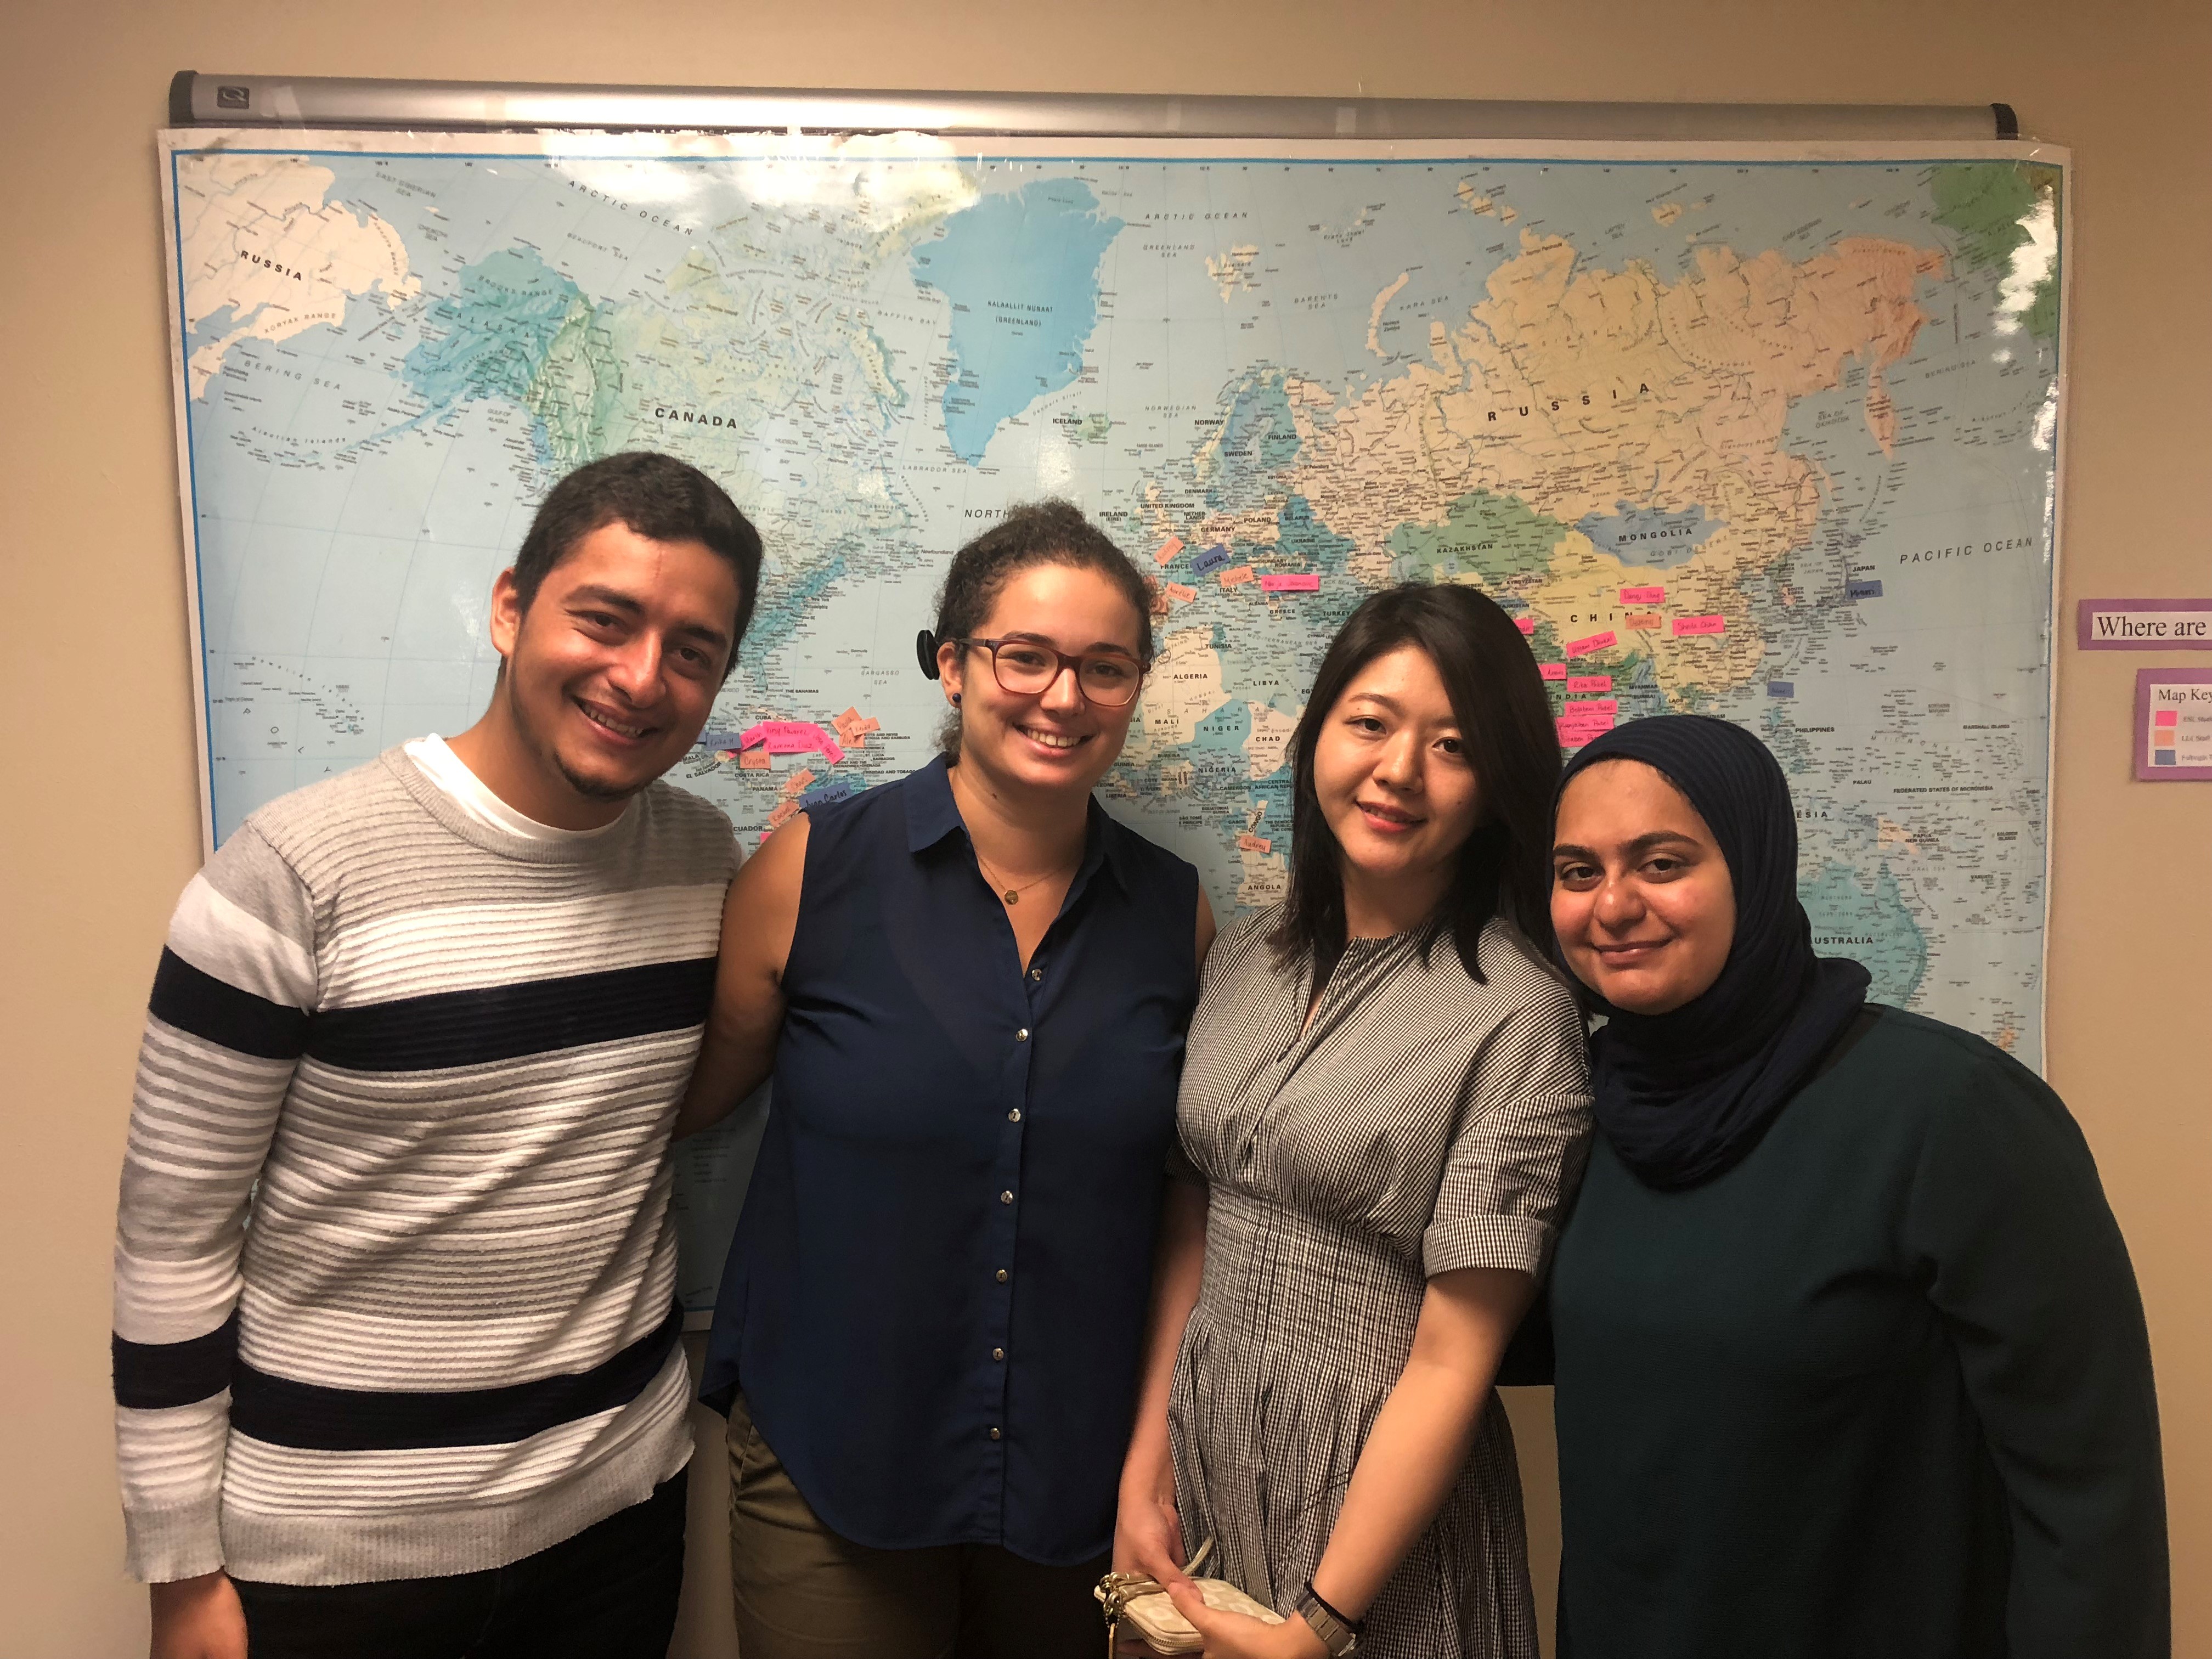 Juan Carlos Ruiz, Laura Martel, Minori Koga, and Maryam Ahmed standing in front of a world map.